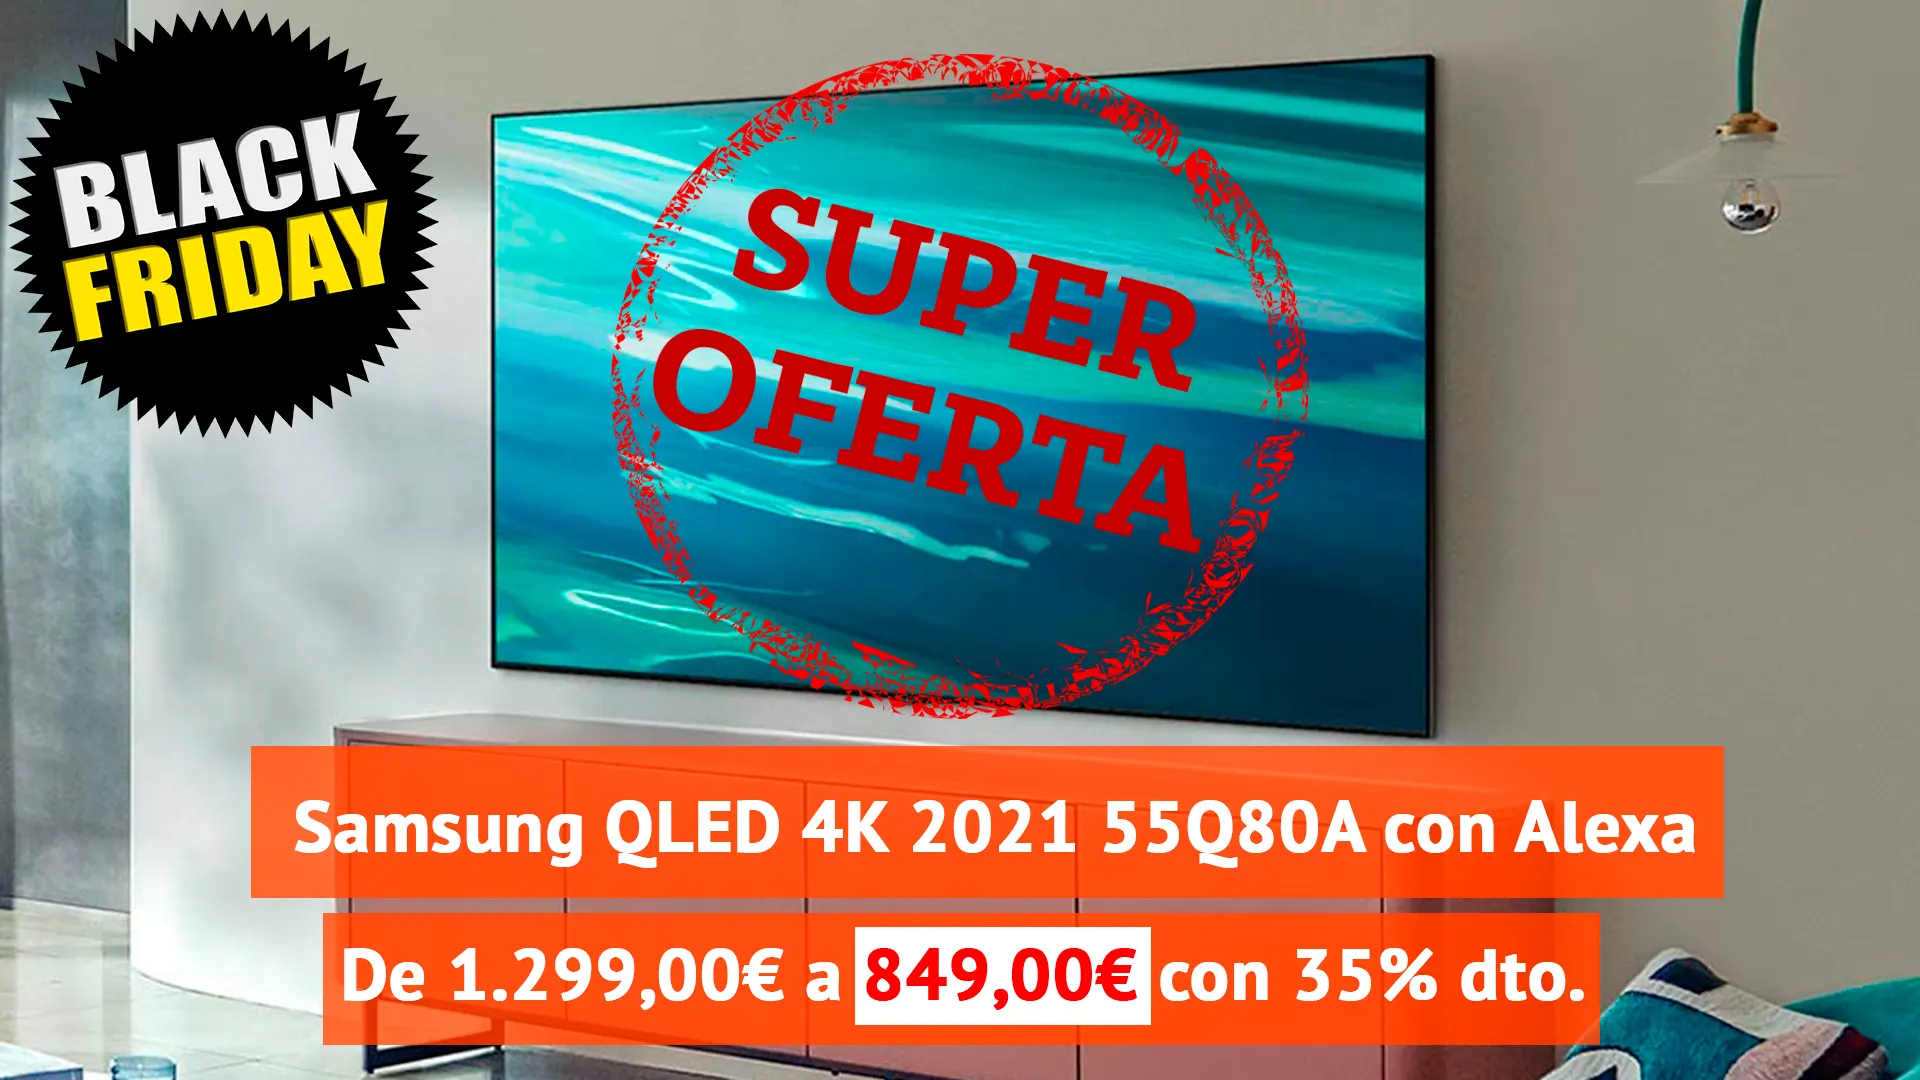 Samsung QLED 4K 2021 55Q80A - Smart TV 55 4K UHD QLED 4K Inteligencia Artificial, Quantum HDR10+, Direct Full Array, Motion Xcelerator Turbo+, OTS y Alexa Integrada. Oferta Black Friday Amazon por solo 849,99€.